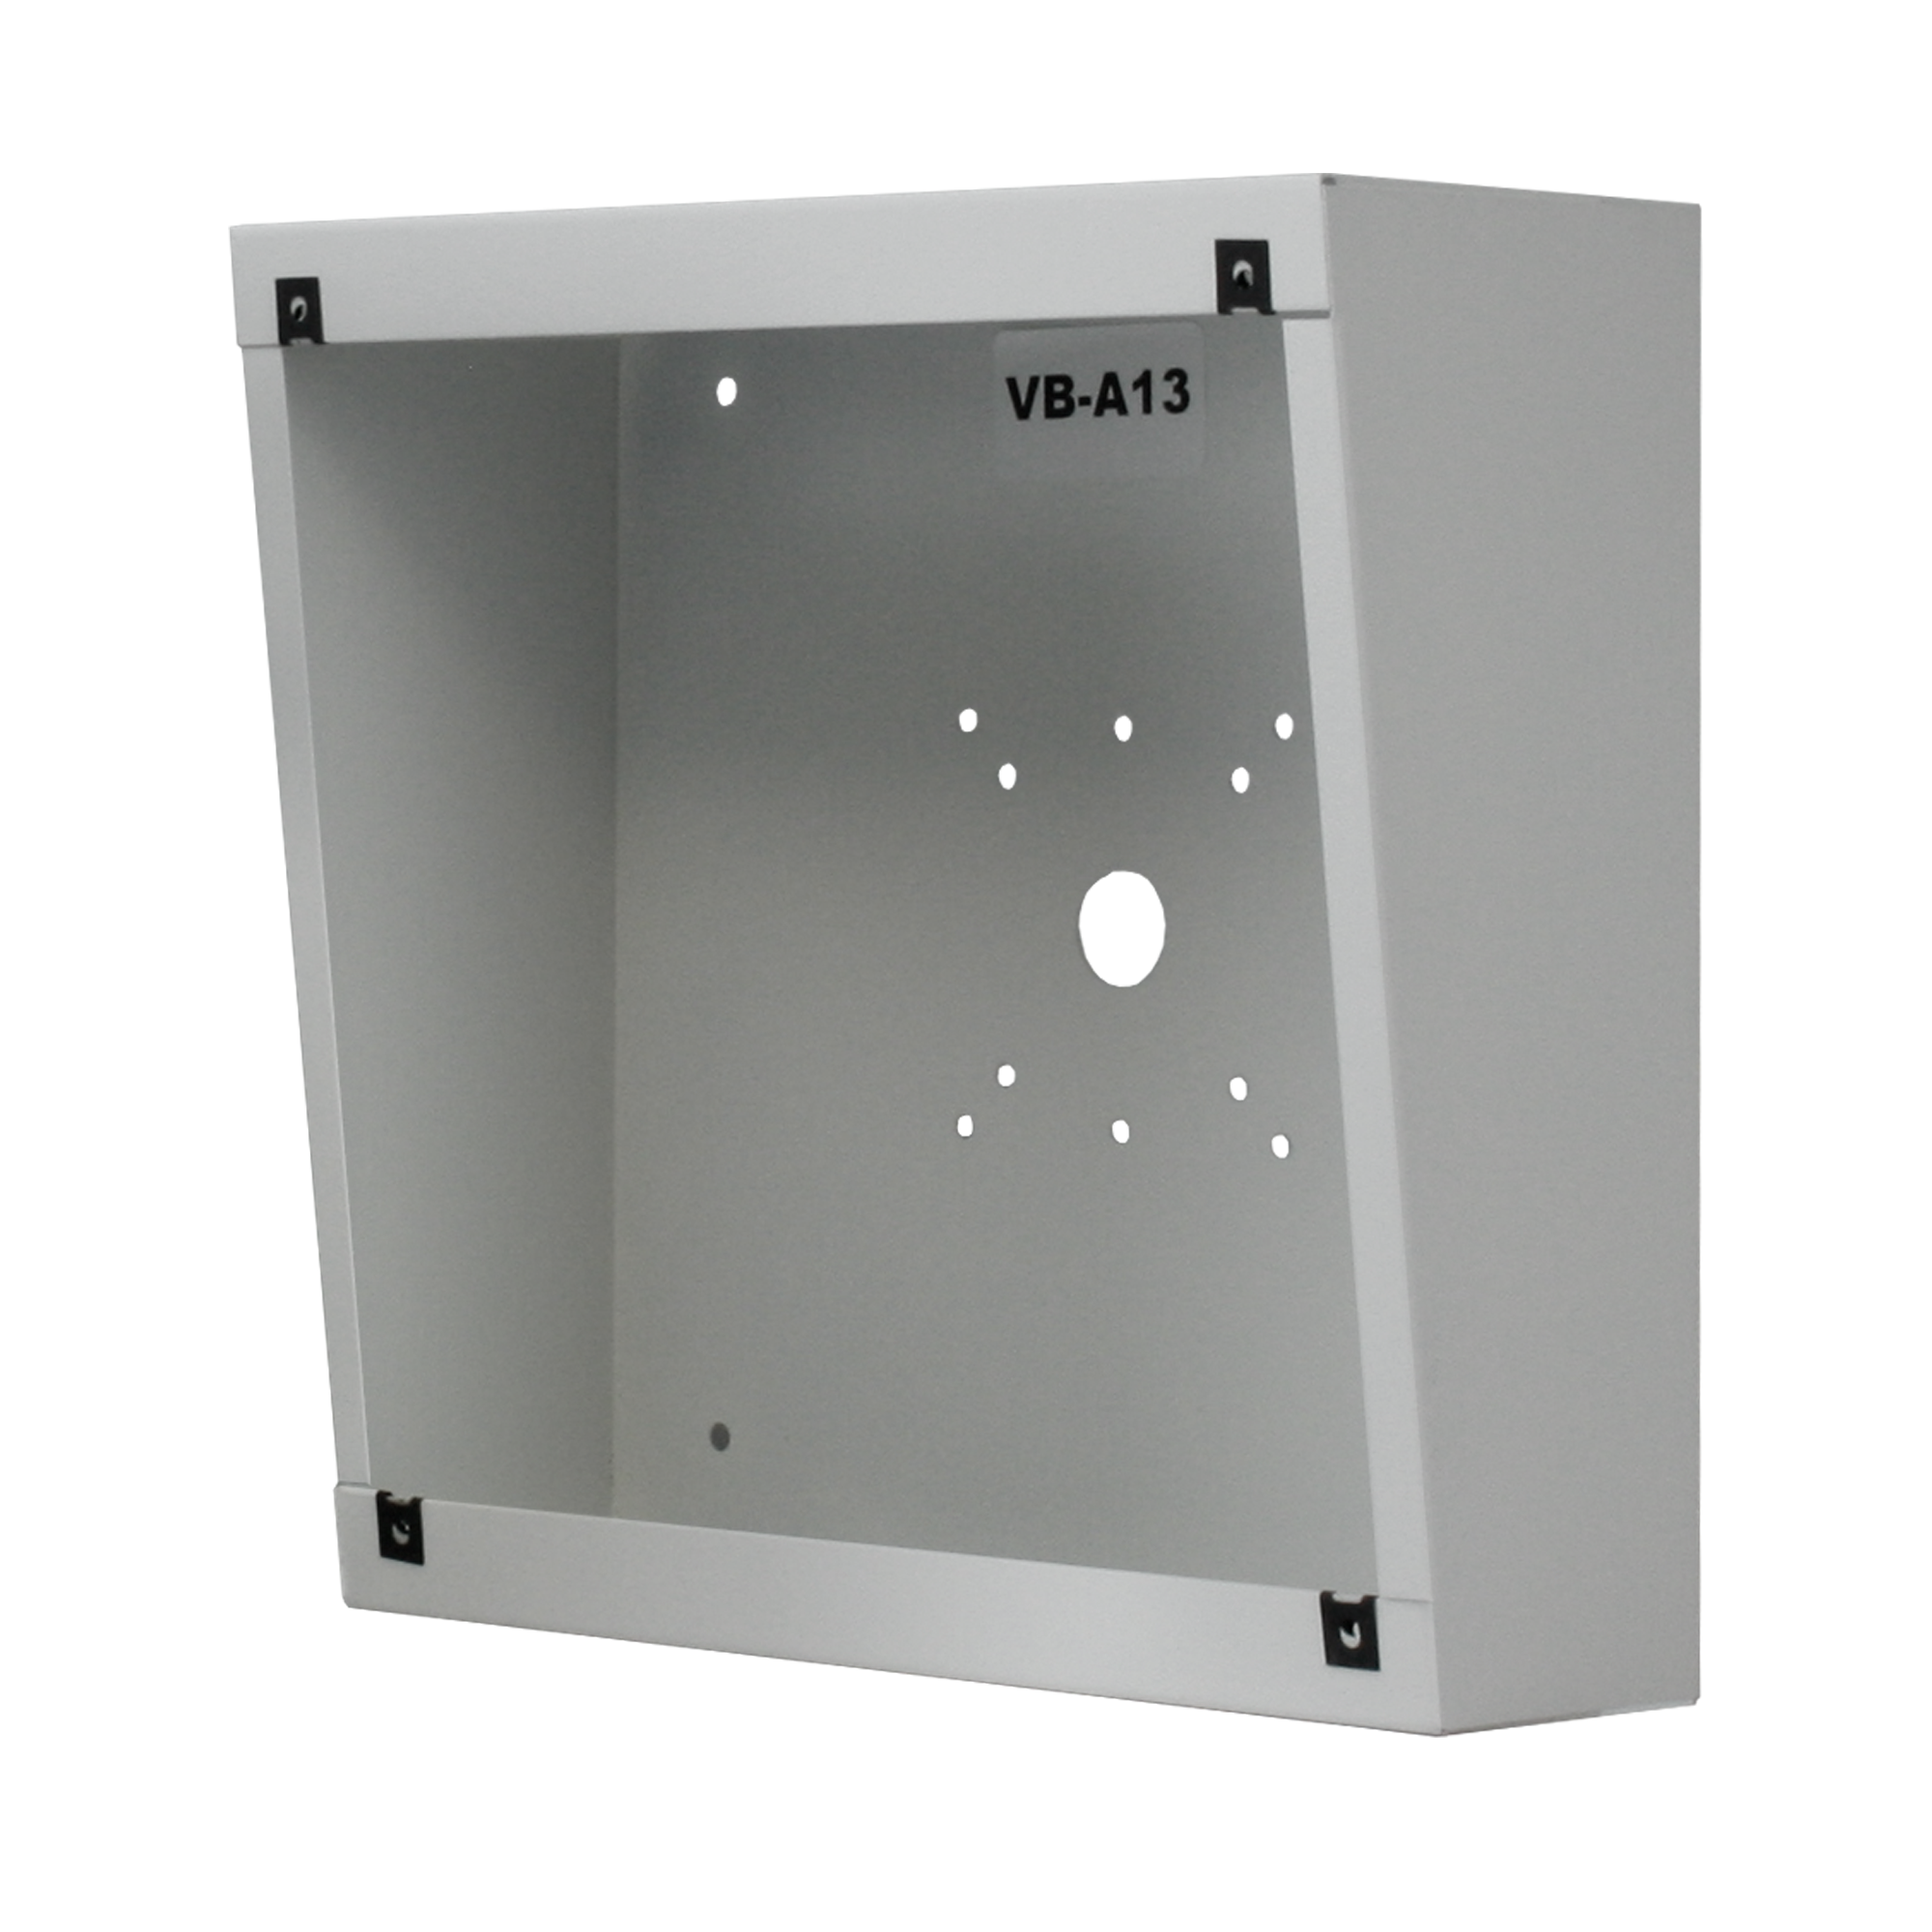 VB-A13 Angled Backbox for Square Speaker Faceplates